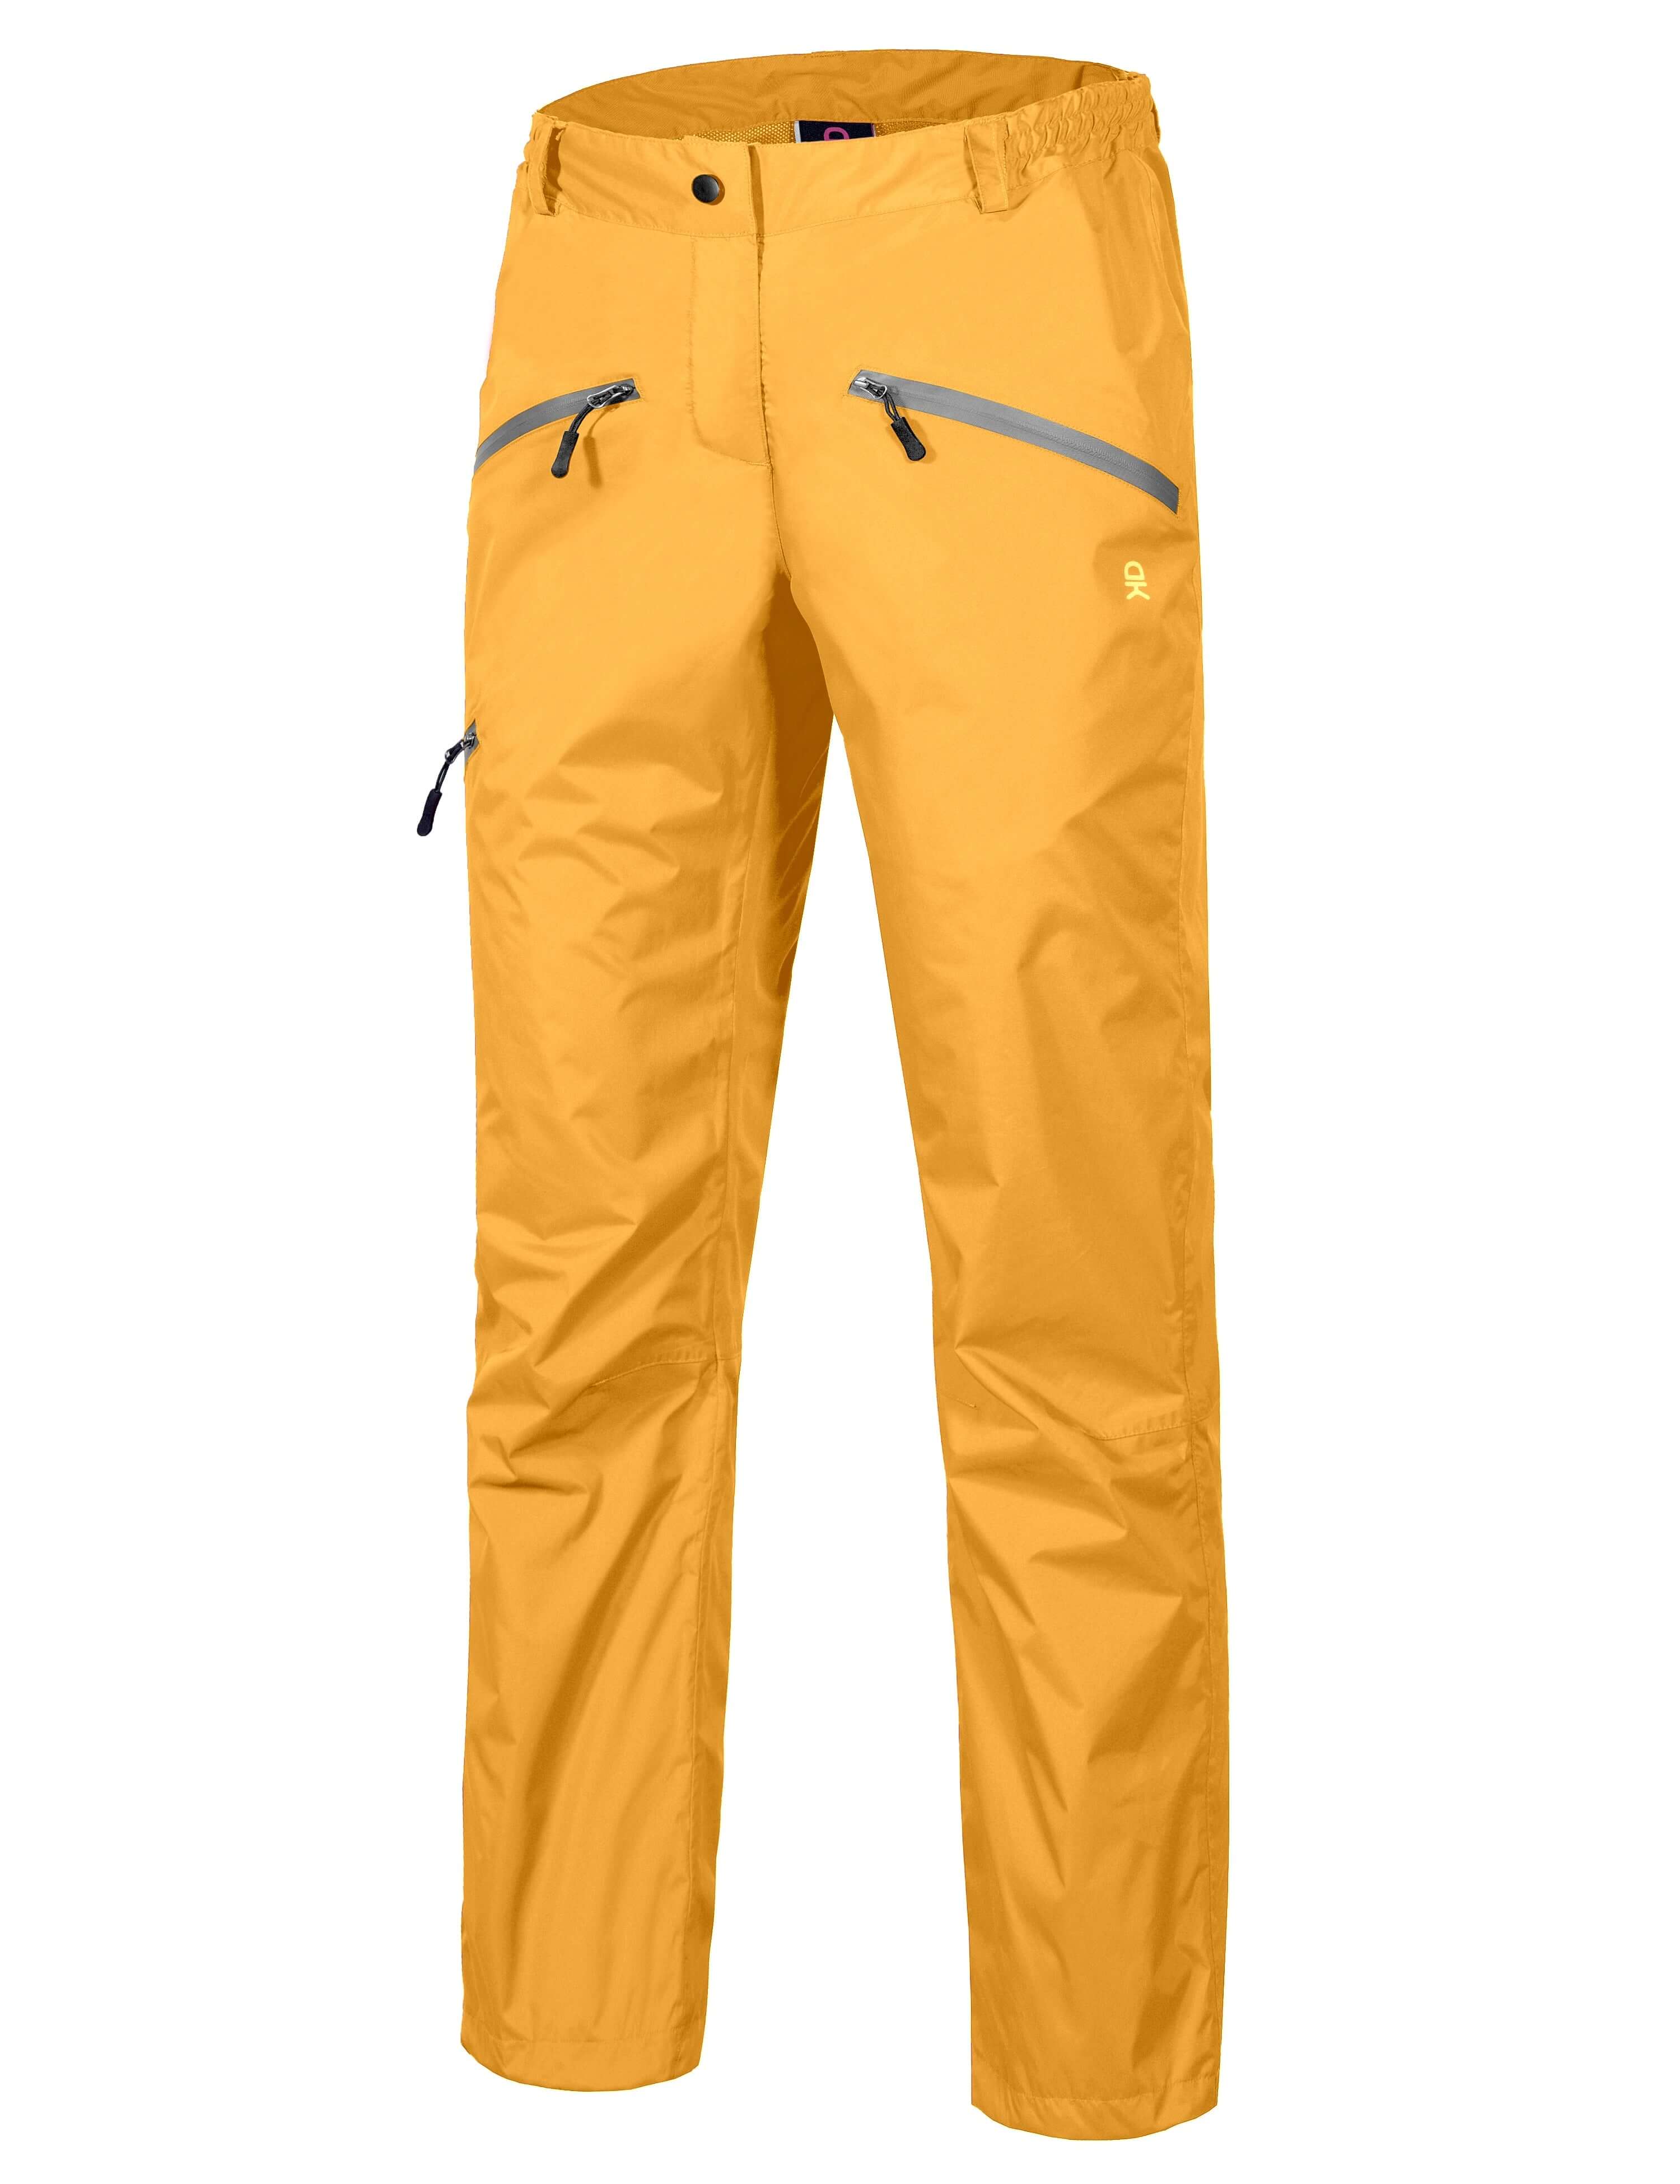 womens lightweight waterproof breathable hiking rain pants yellow lda340